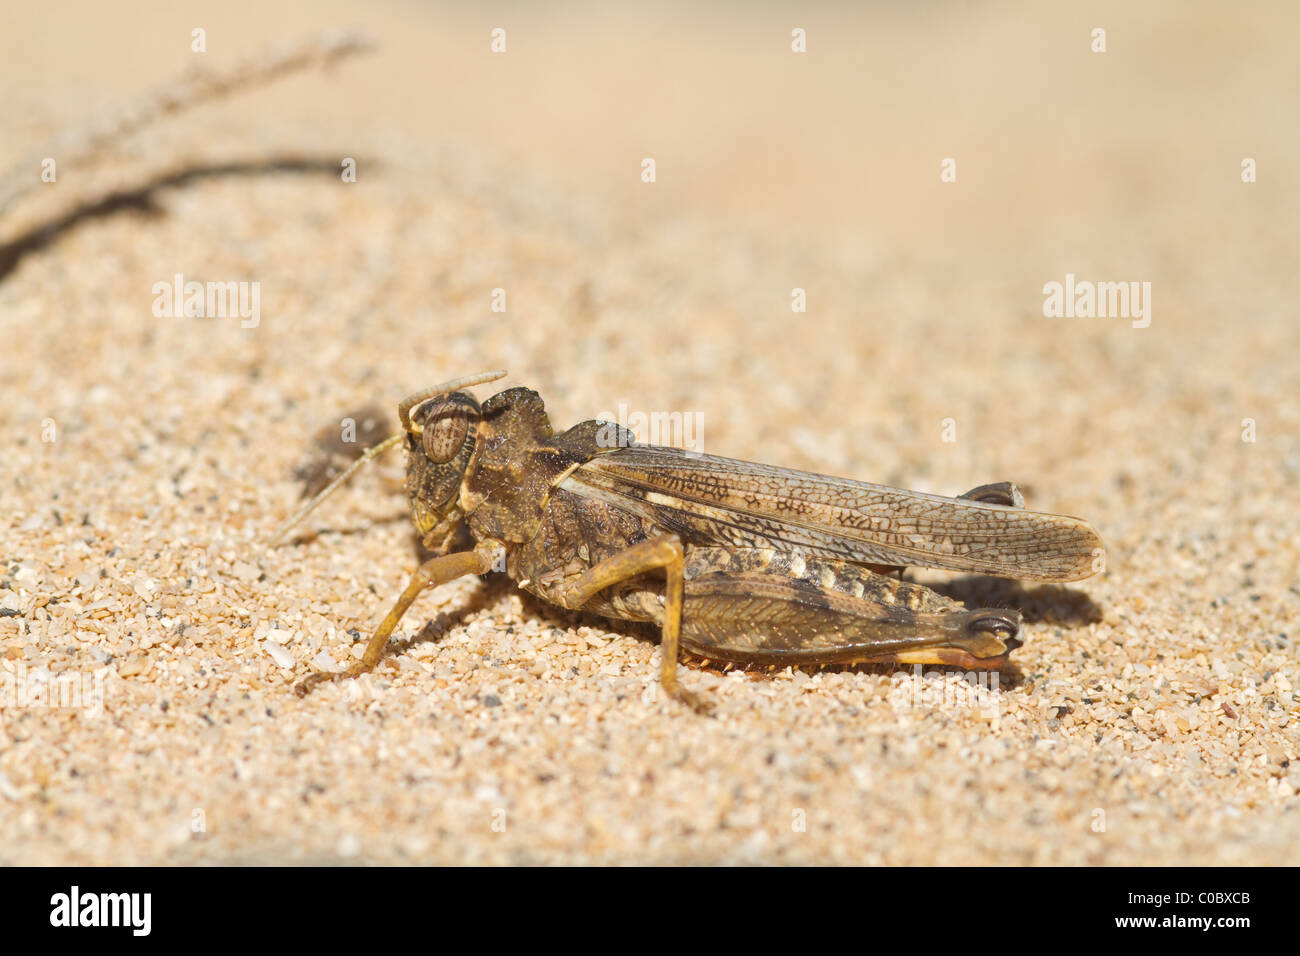 Grasshopper (Orthoptera) resting on a gravel beach Stock Photo